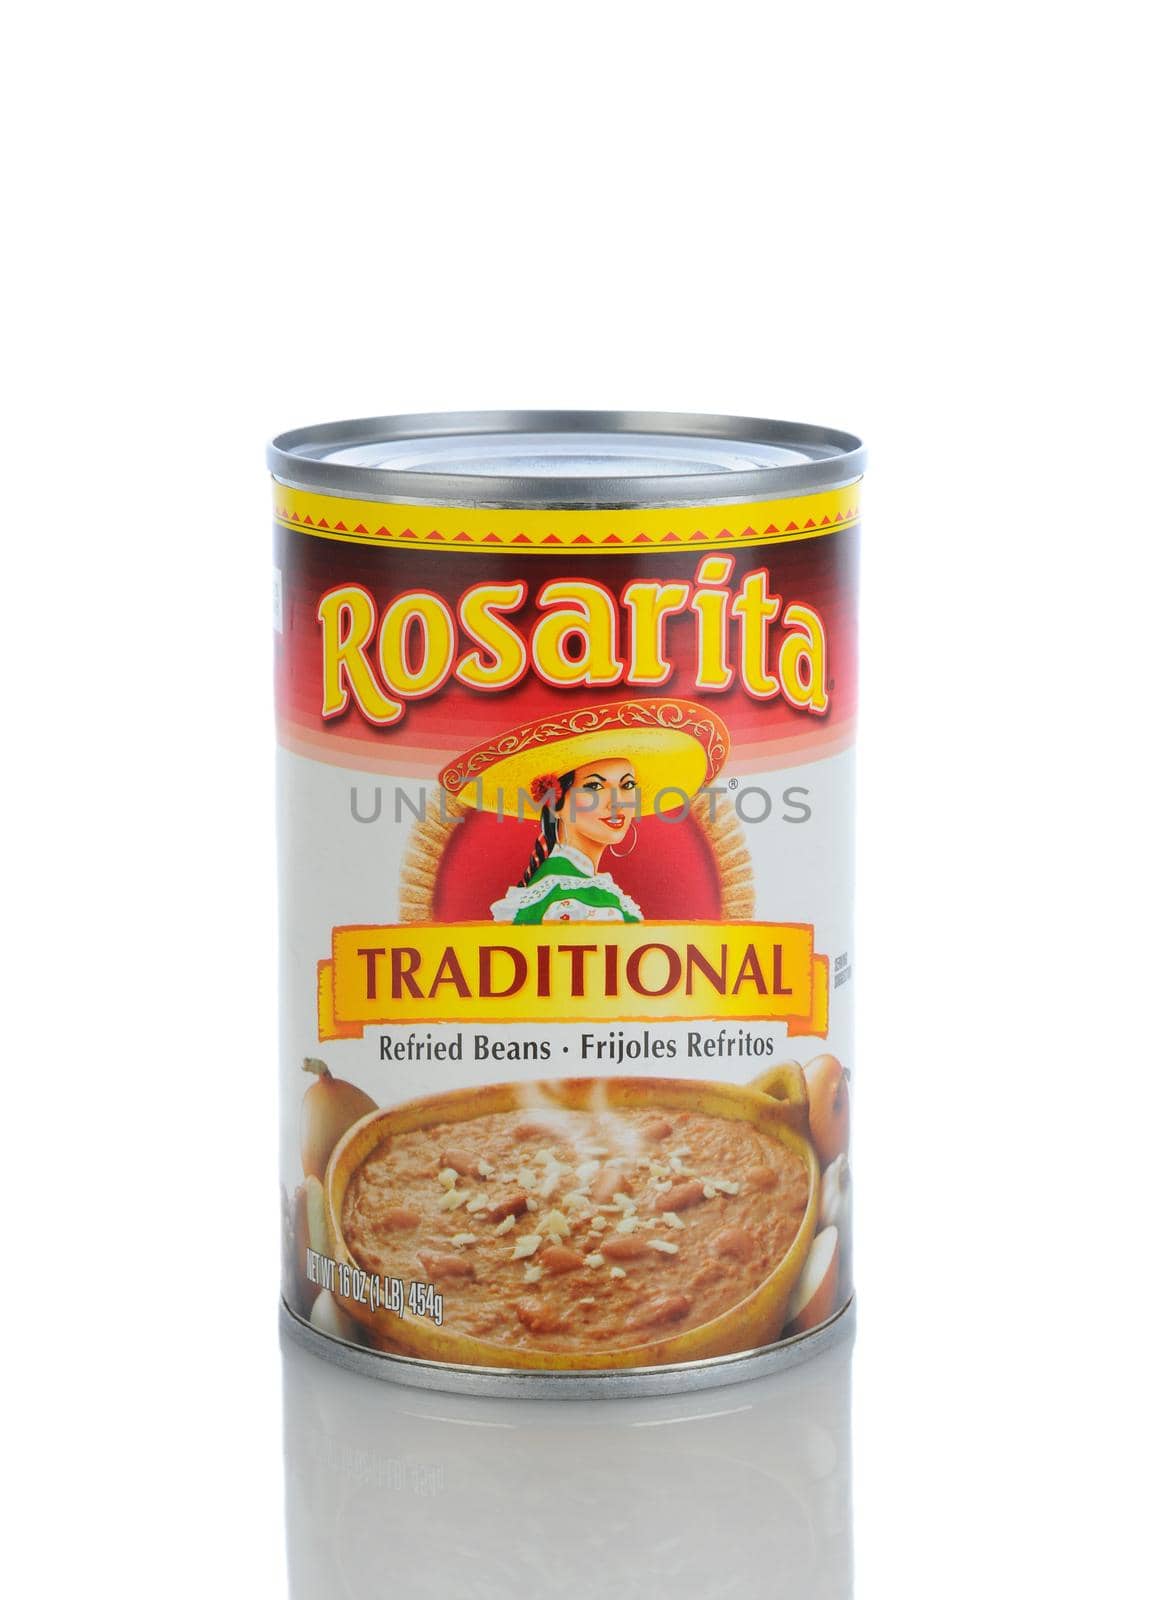 Rosarita Refried Beans by sCukrov